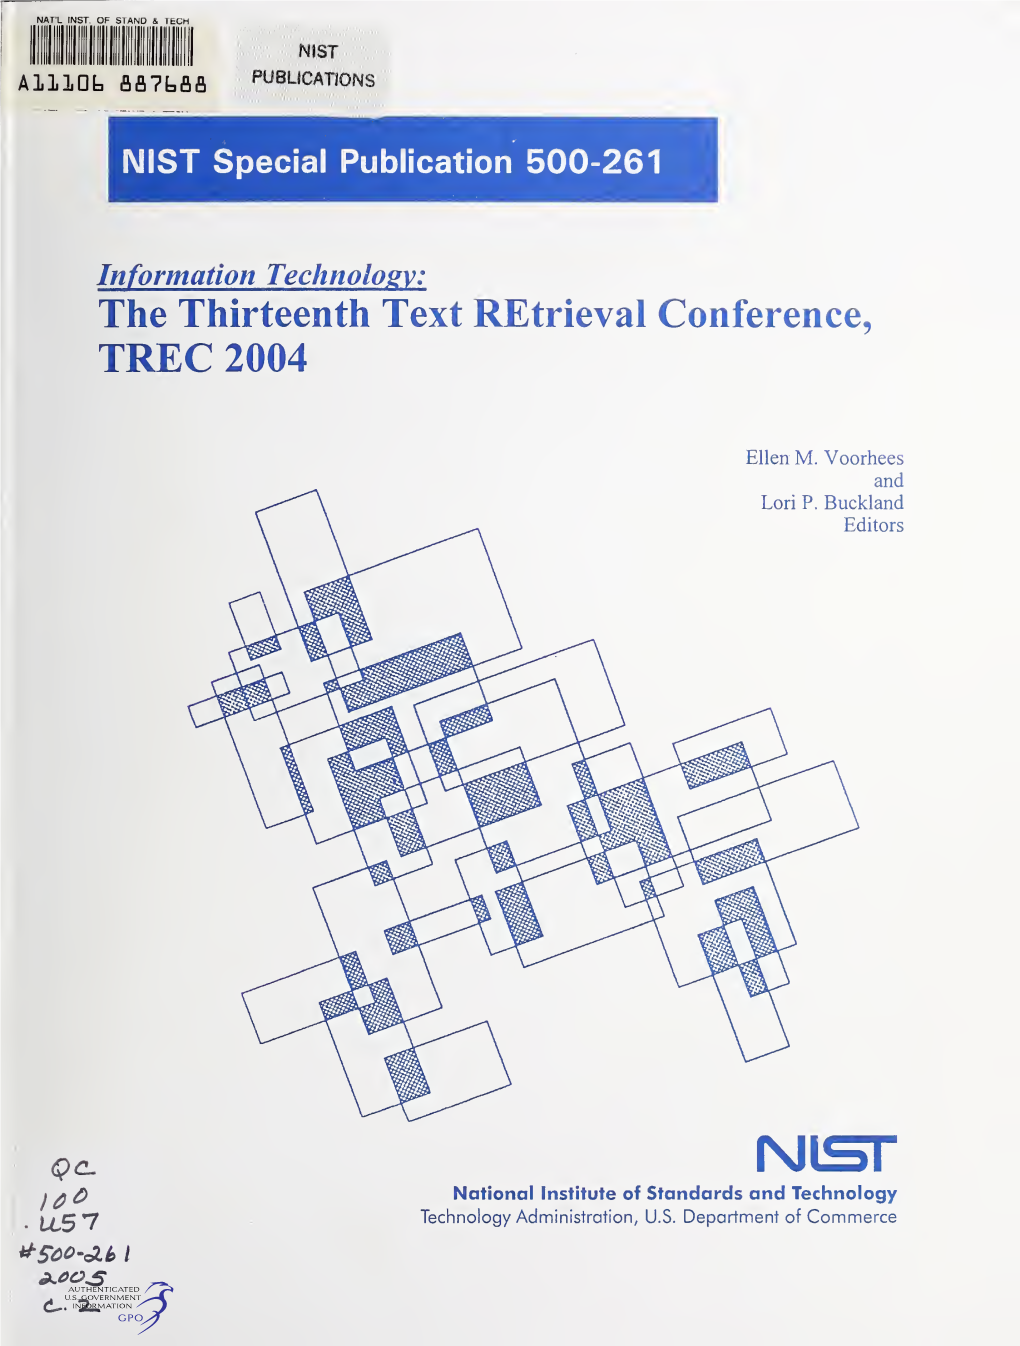 The Thirteenth Text Retrieval Conference, TREC 2004